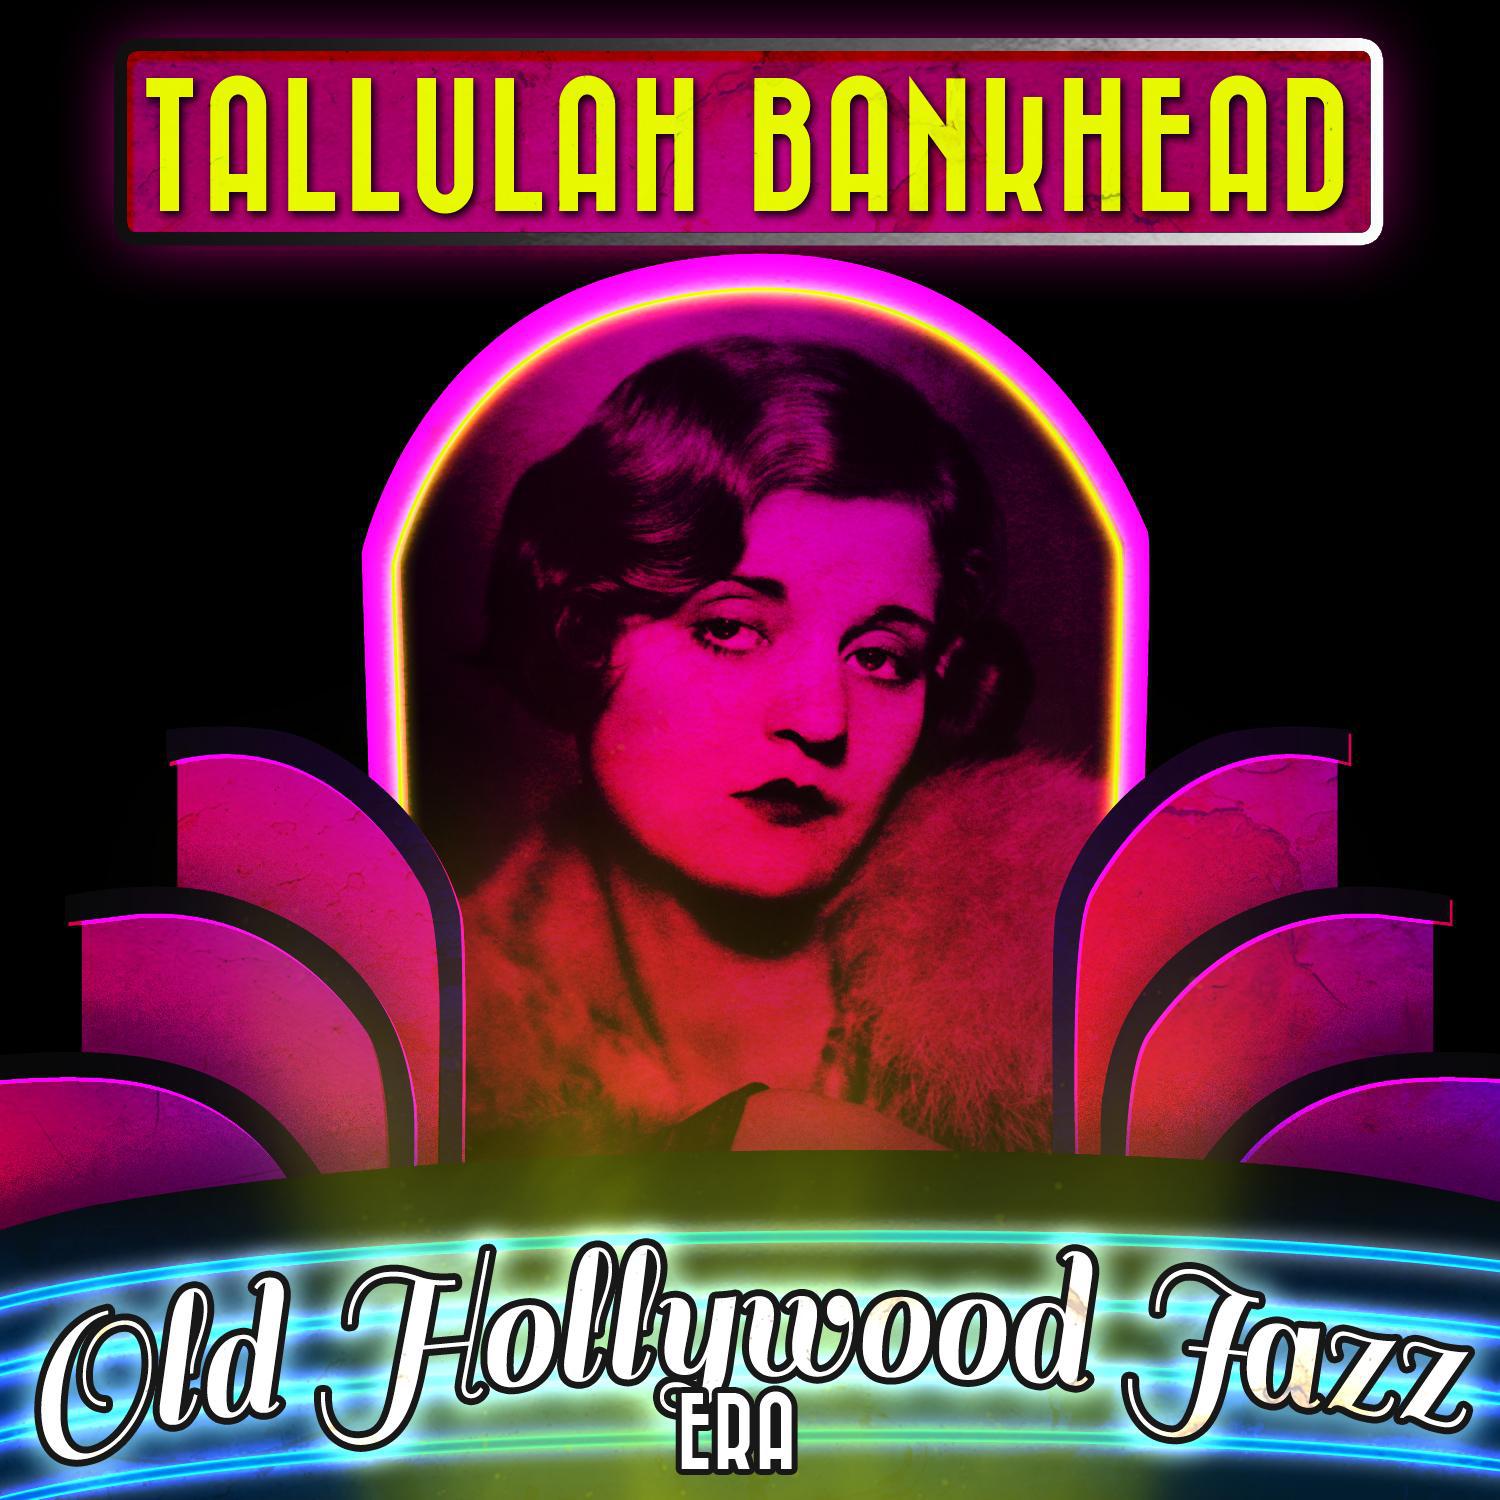 Tallulah Bankhead - The Big Show, Pt. 4